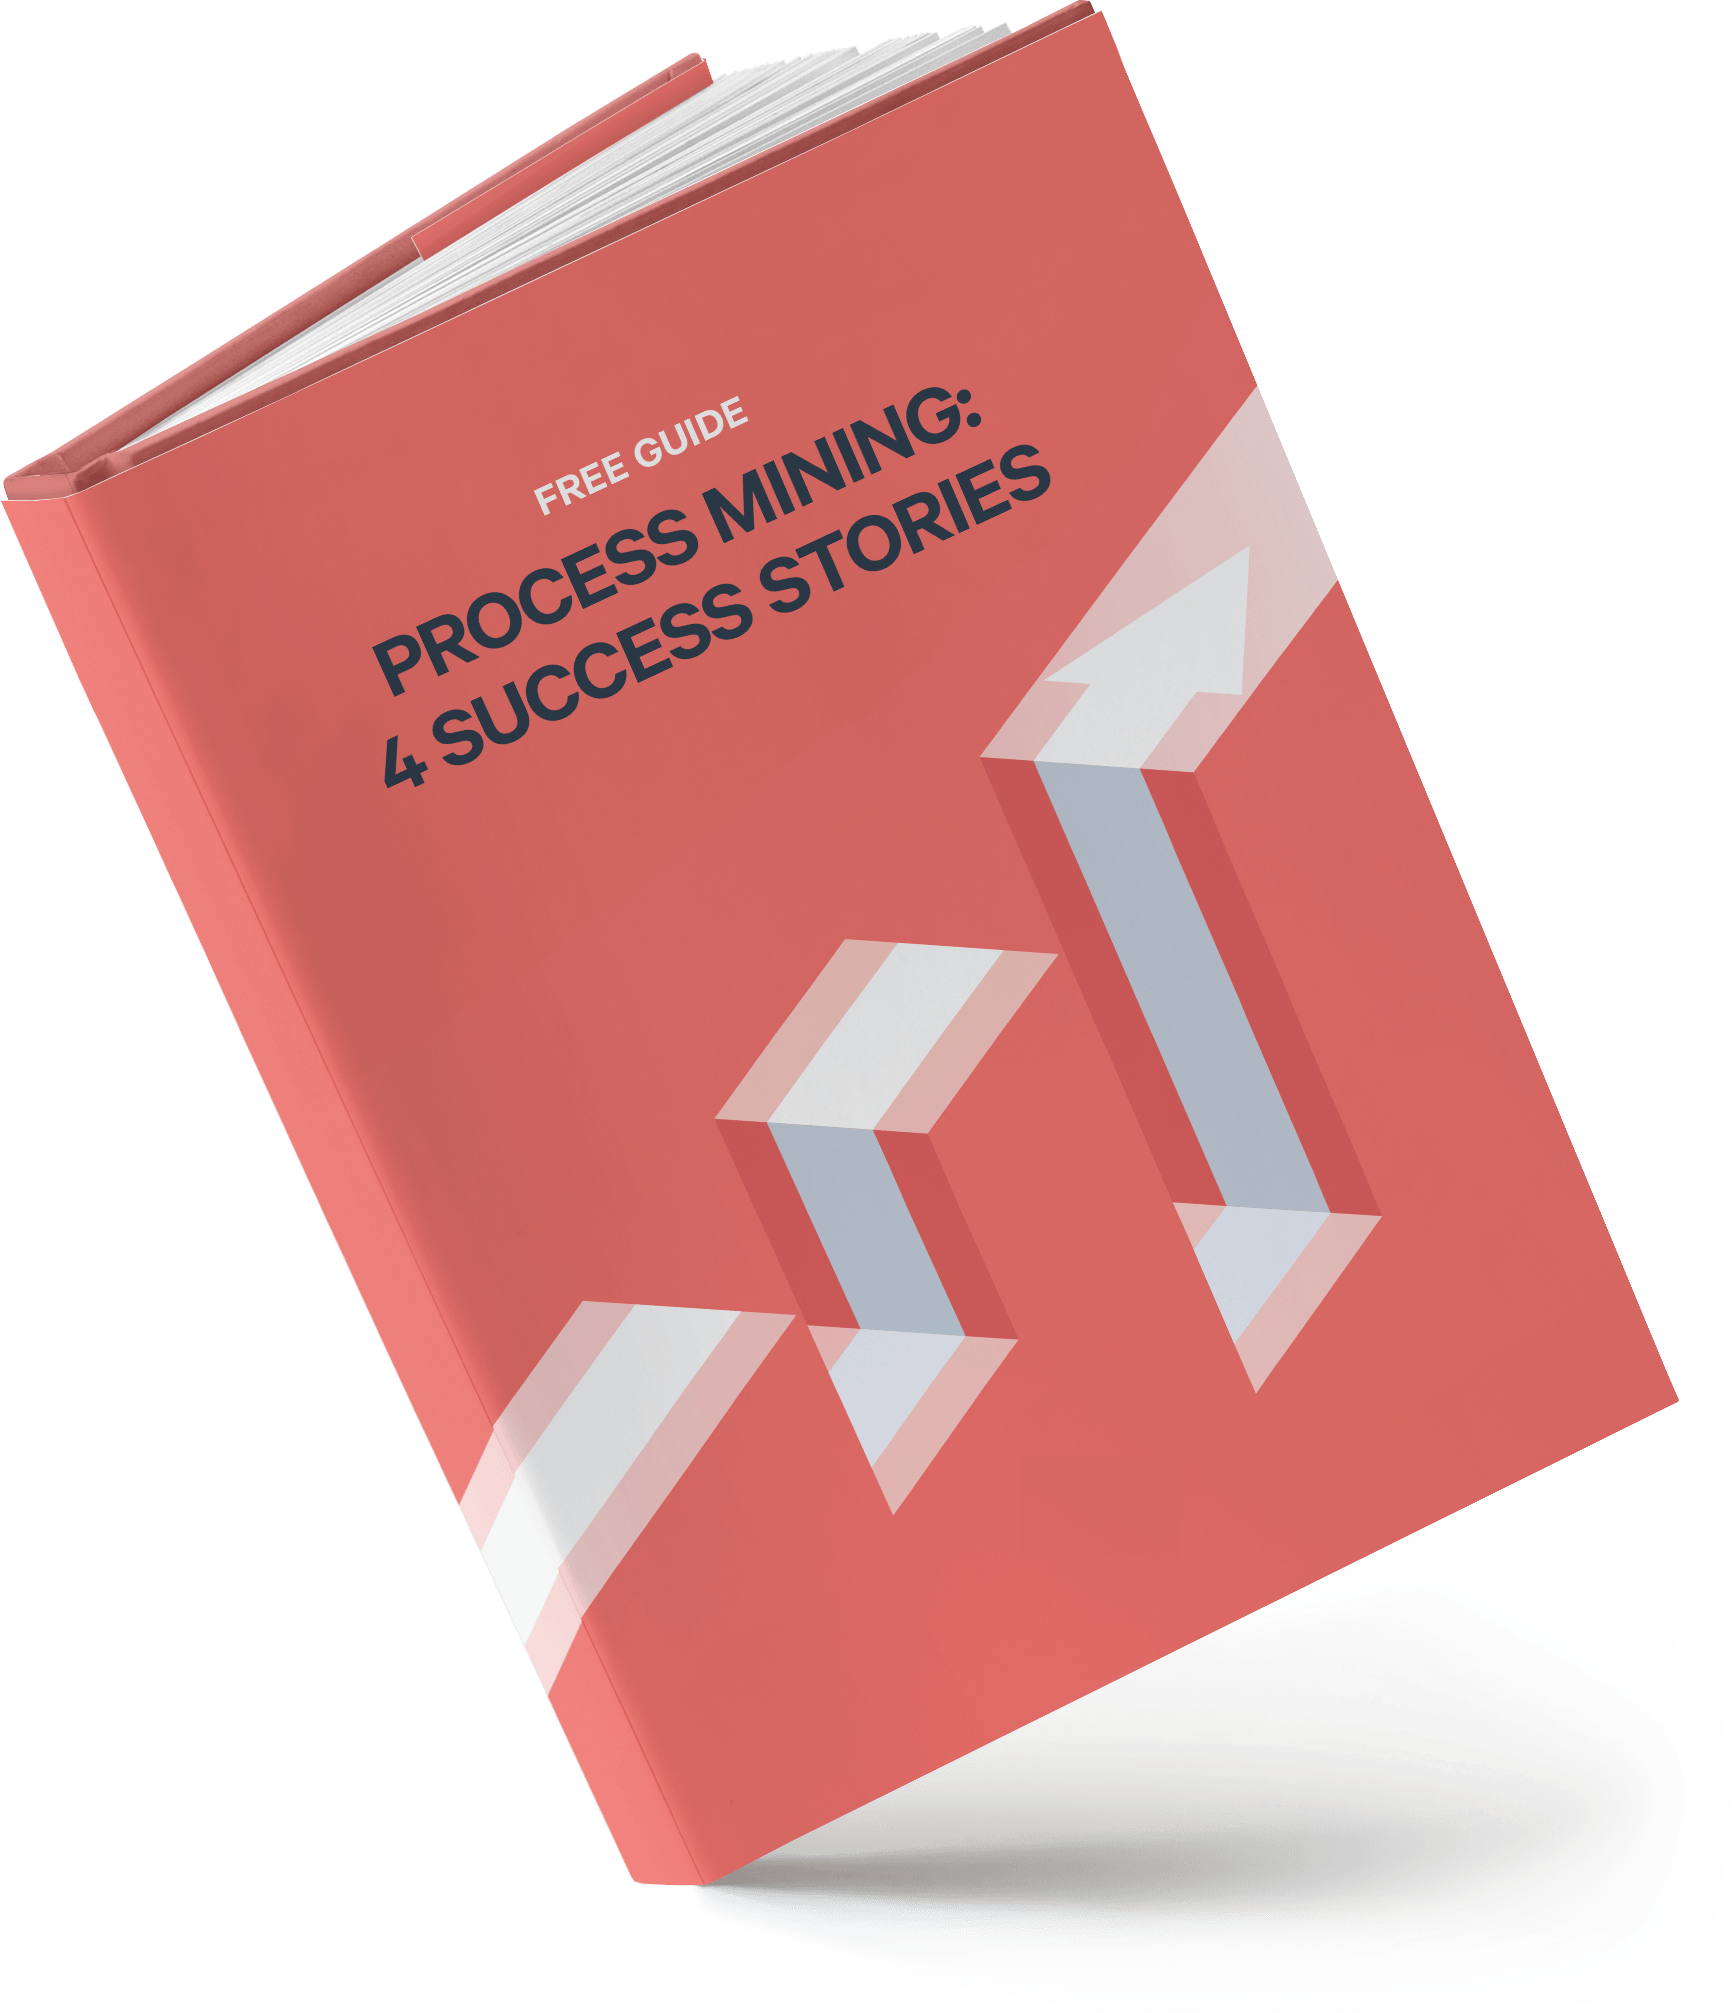 minit-free-guide-process-mining-4-success-stories@3x